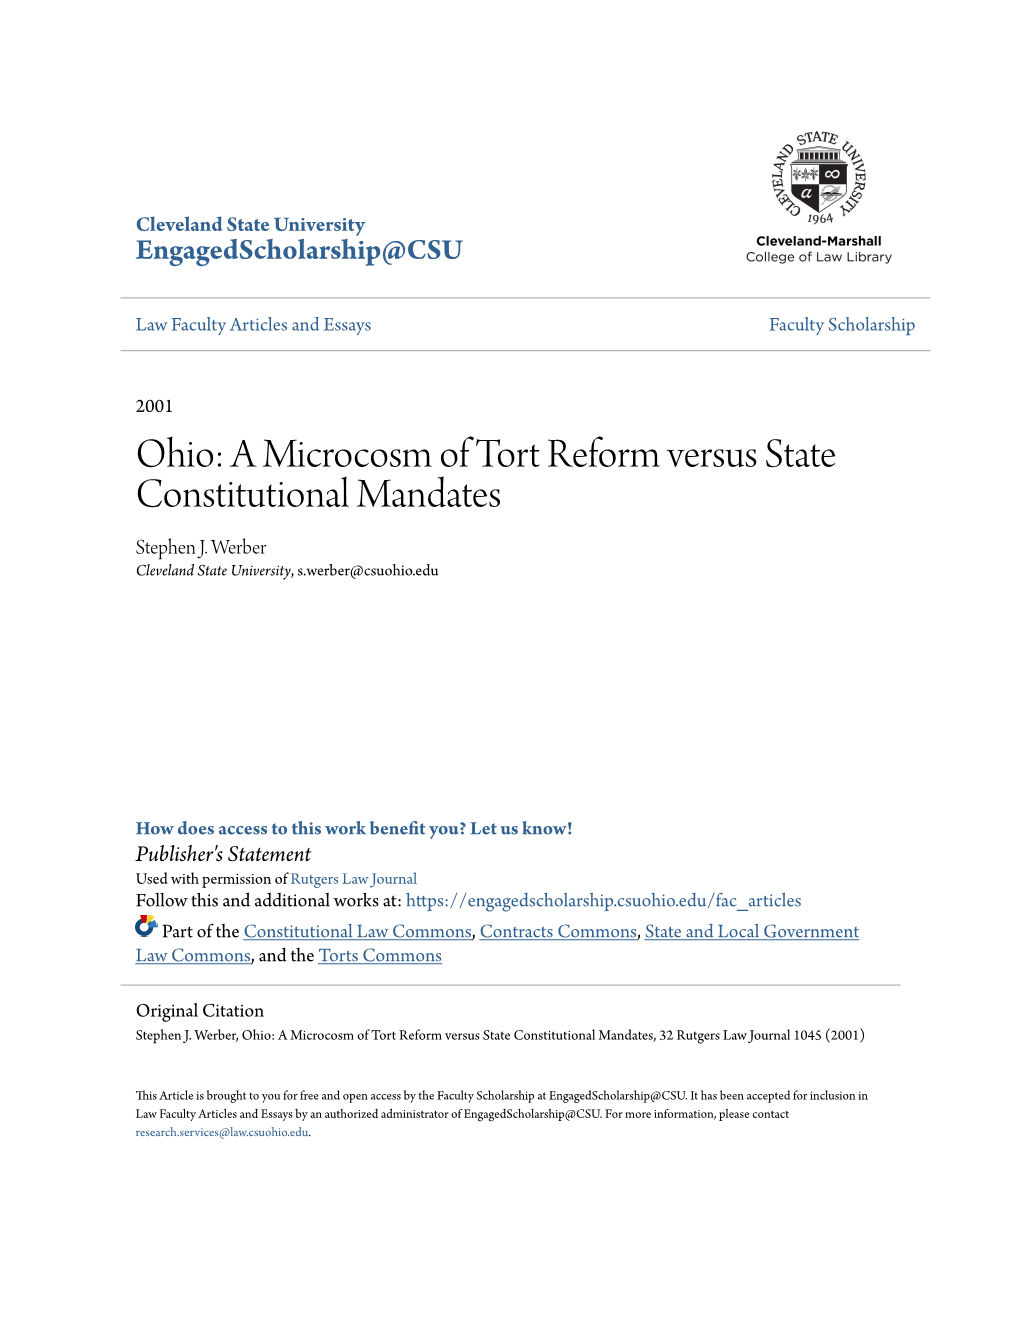 A Microcosm of Tort Reform Versus State Constitutional Mandates Stephen J